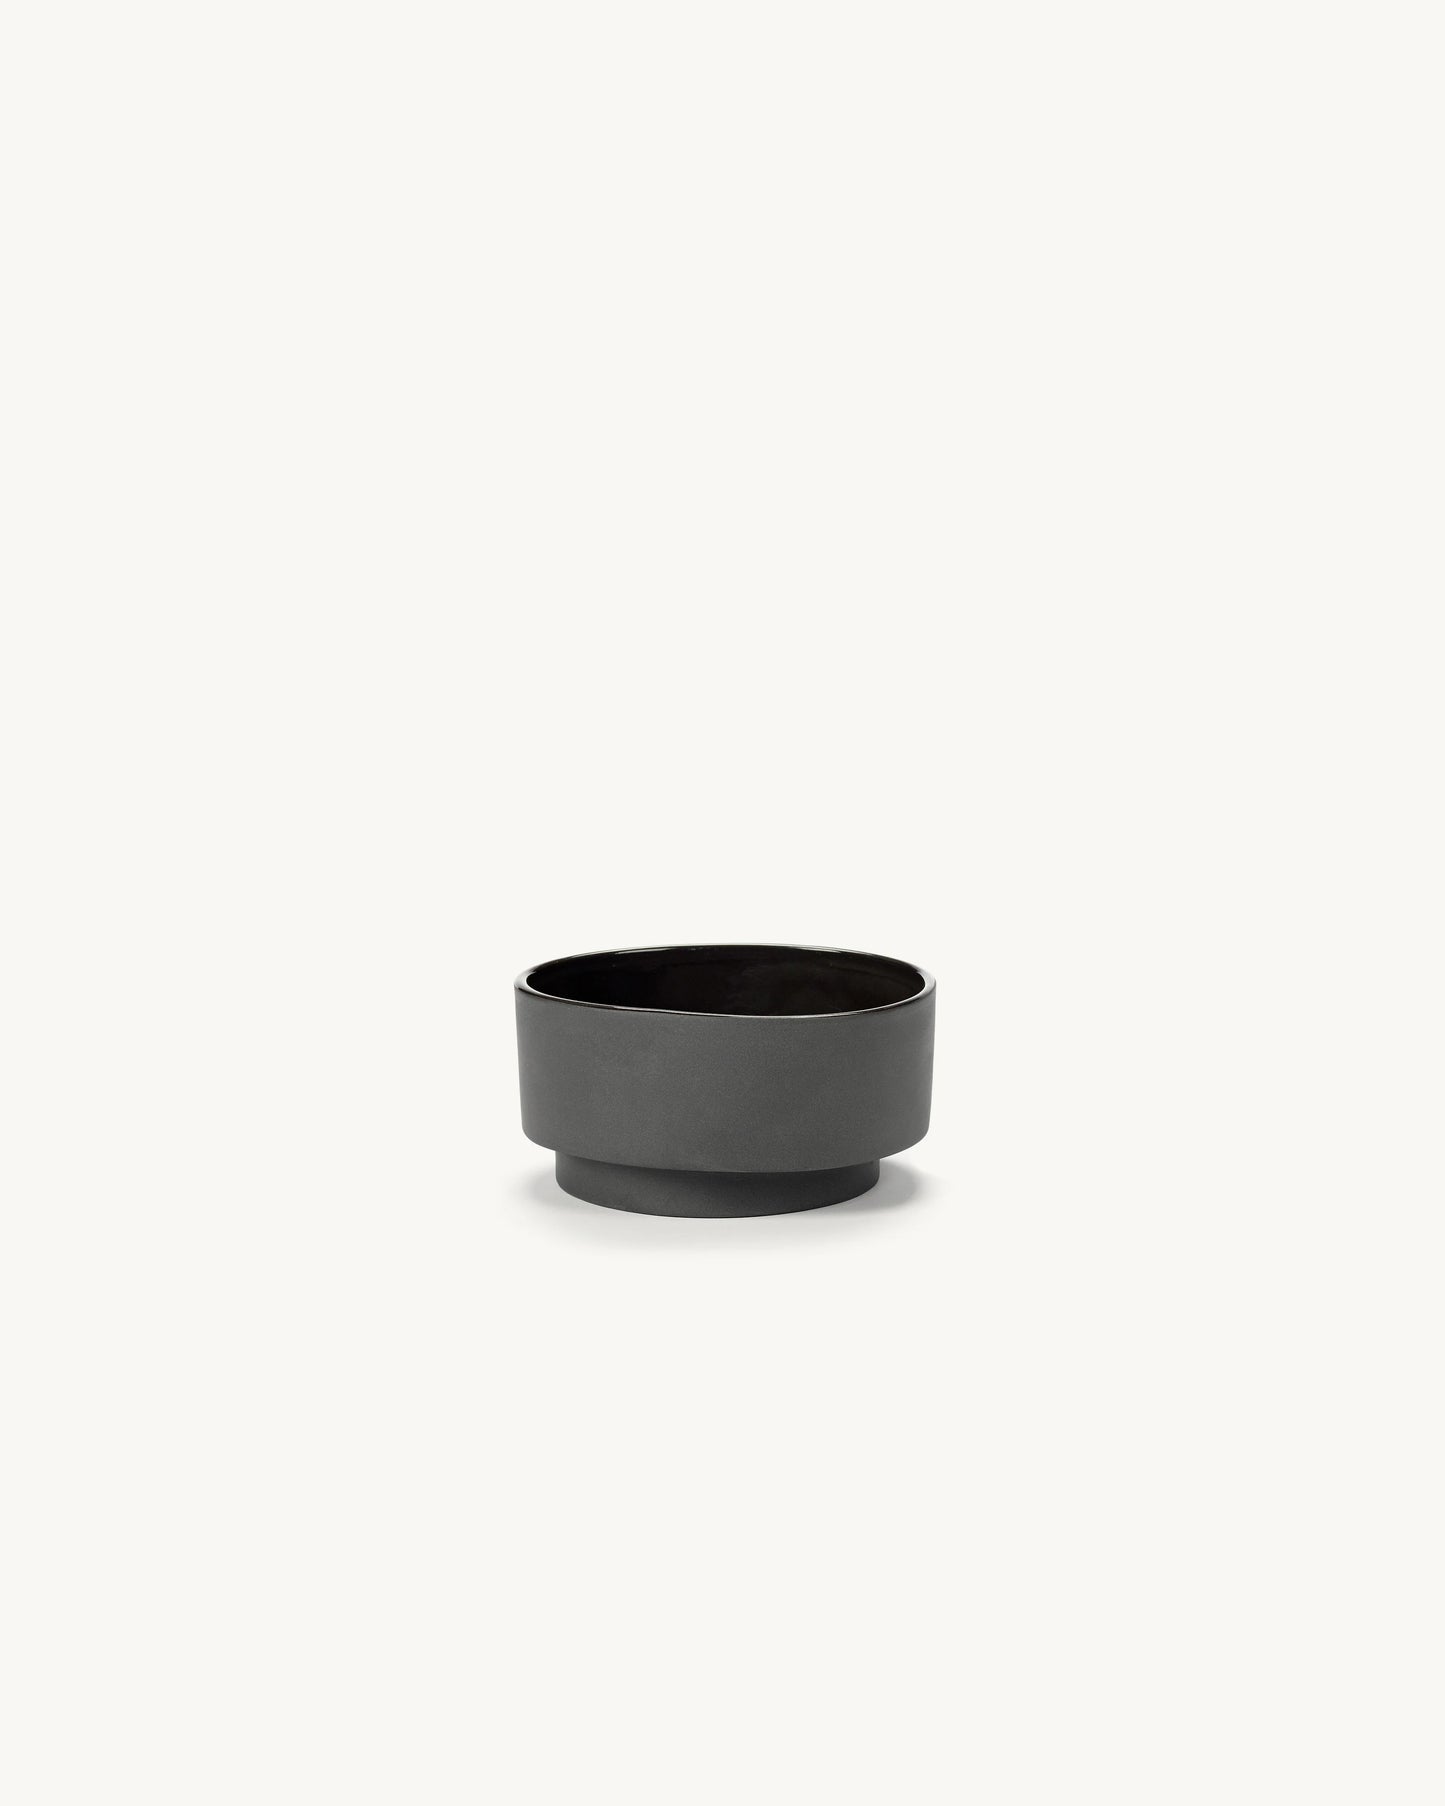 Valerie Objects Inner Circle Bowl, grey by Maarten Baas - $34.00